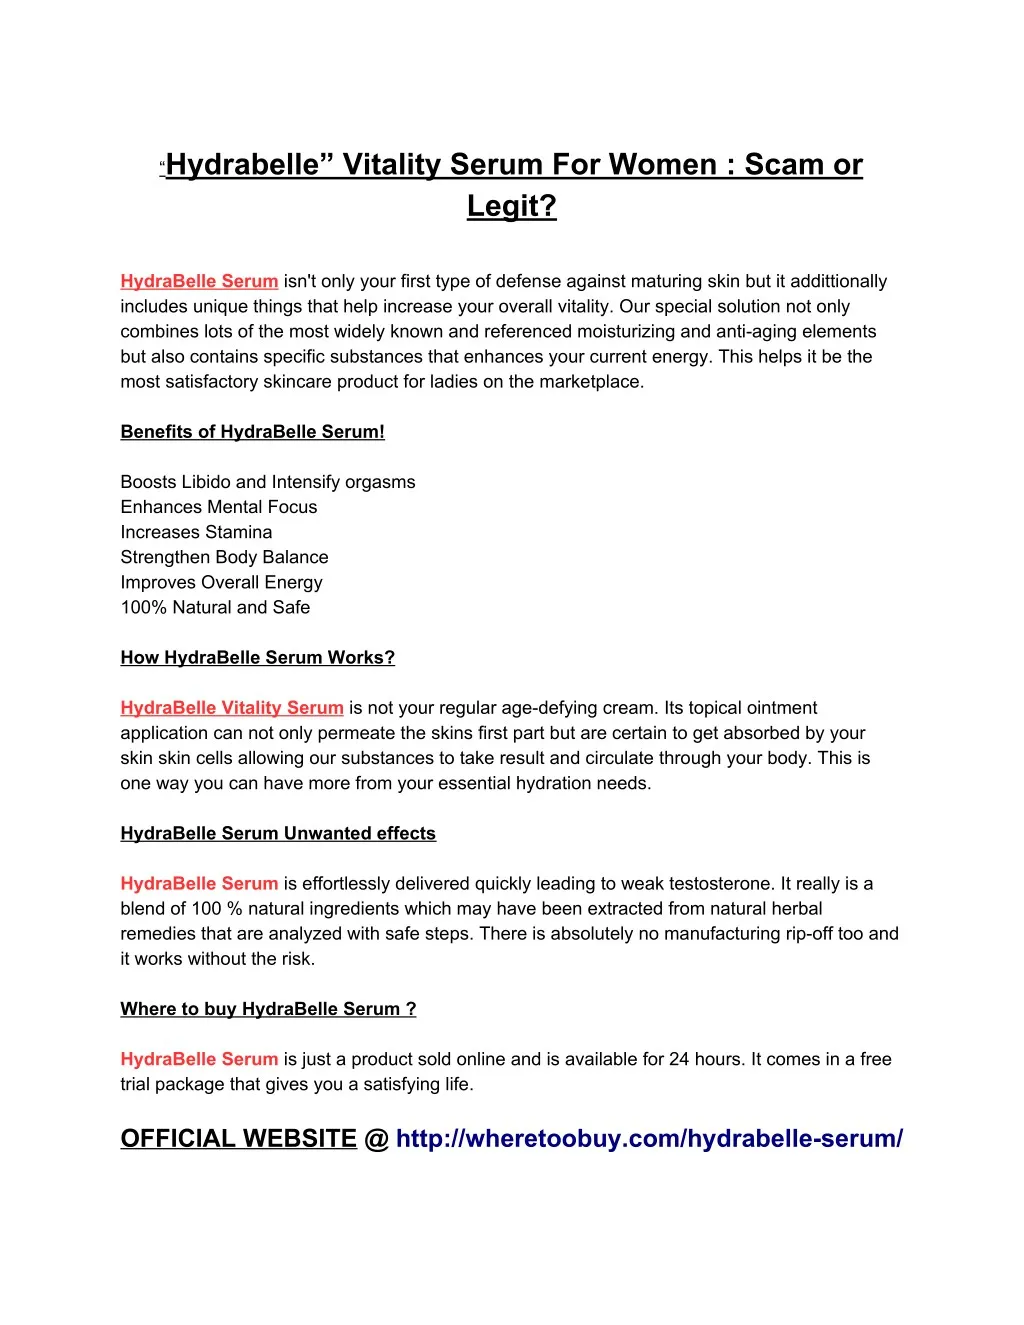 hydrabelle vitality serum for women scam or legit